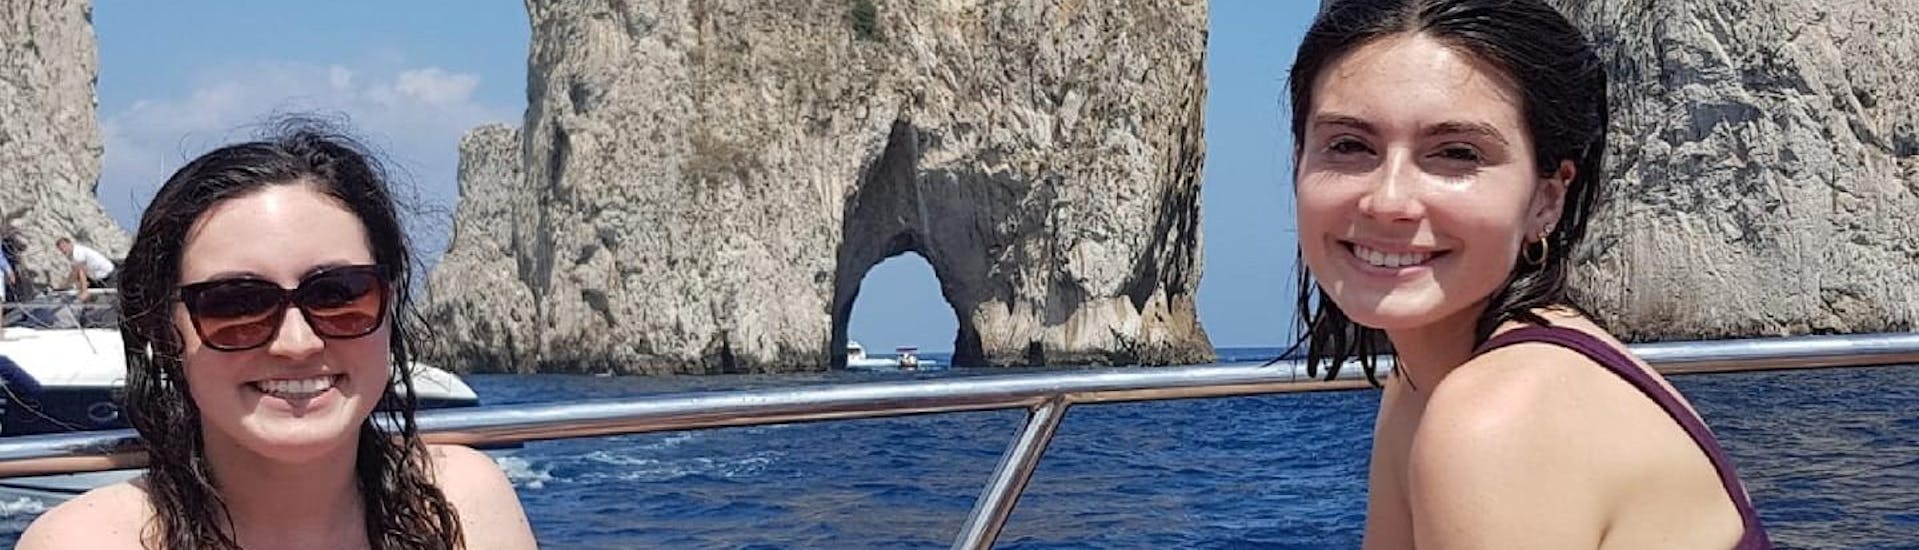 Private Bootstour von Amalfi nach Capri und Blaue Grotte.